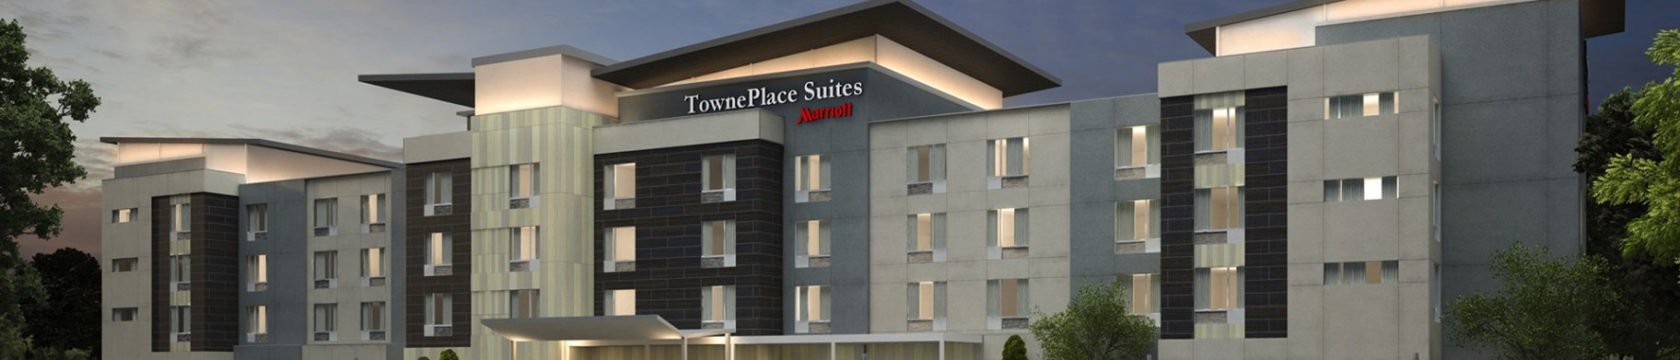 Towne Place Suites Marriott Hotel Project